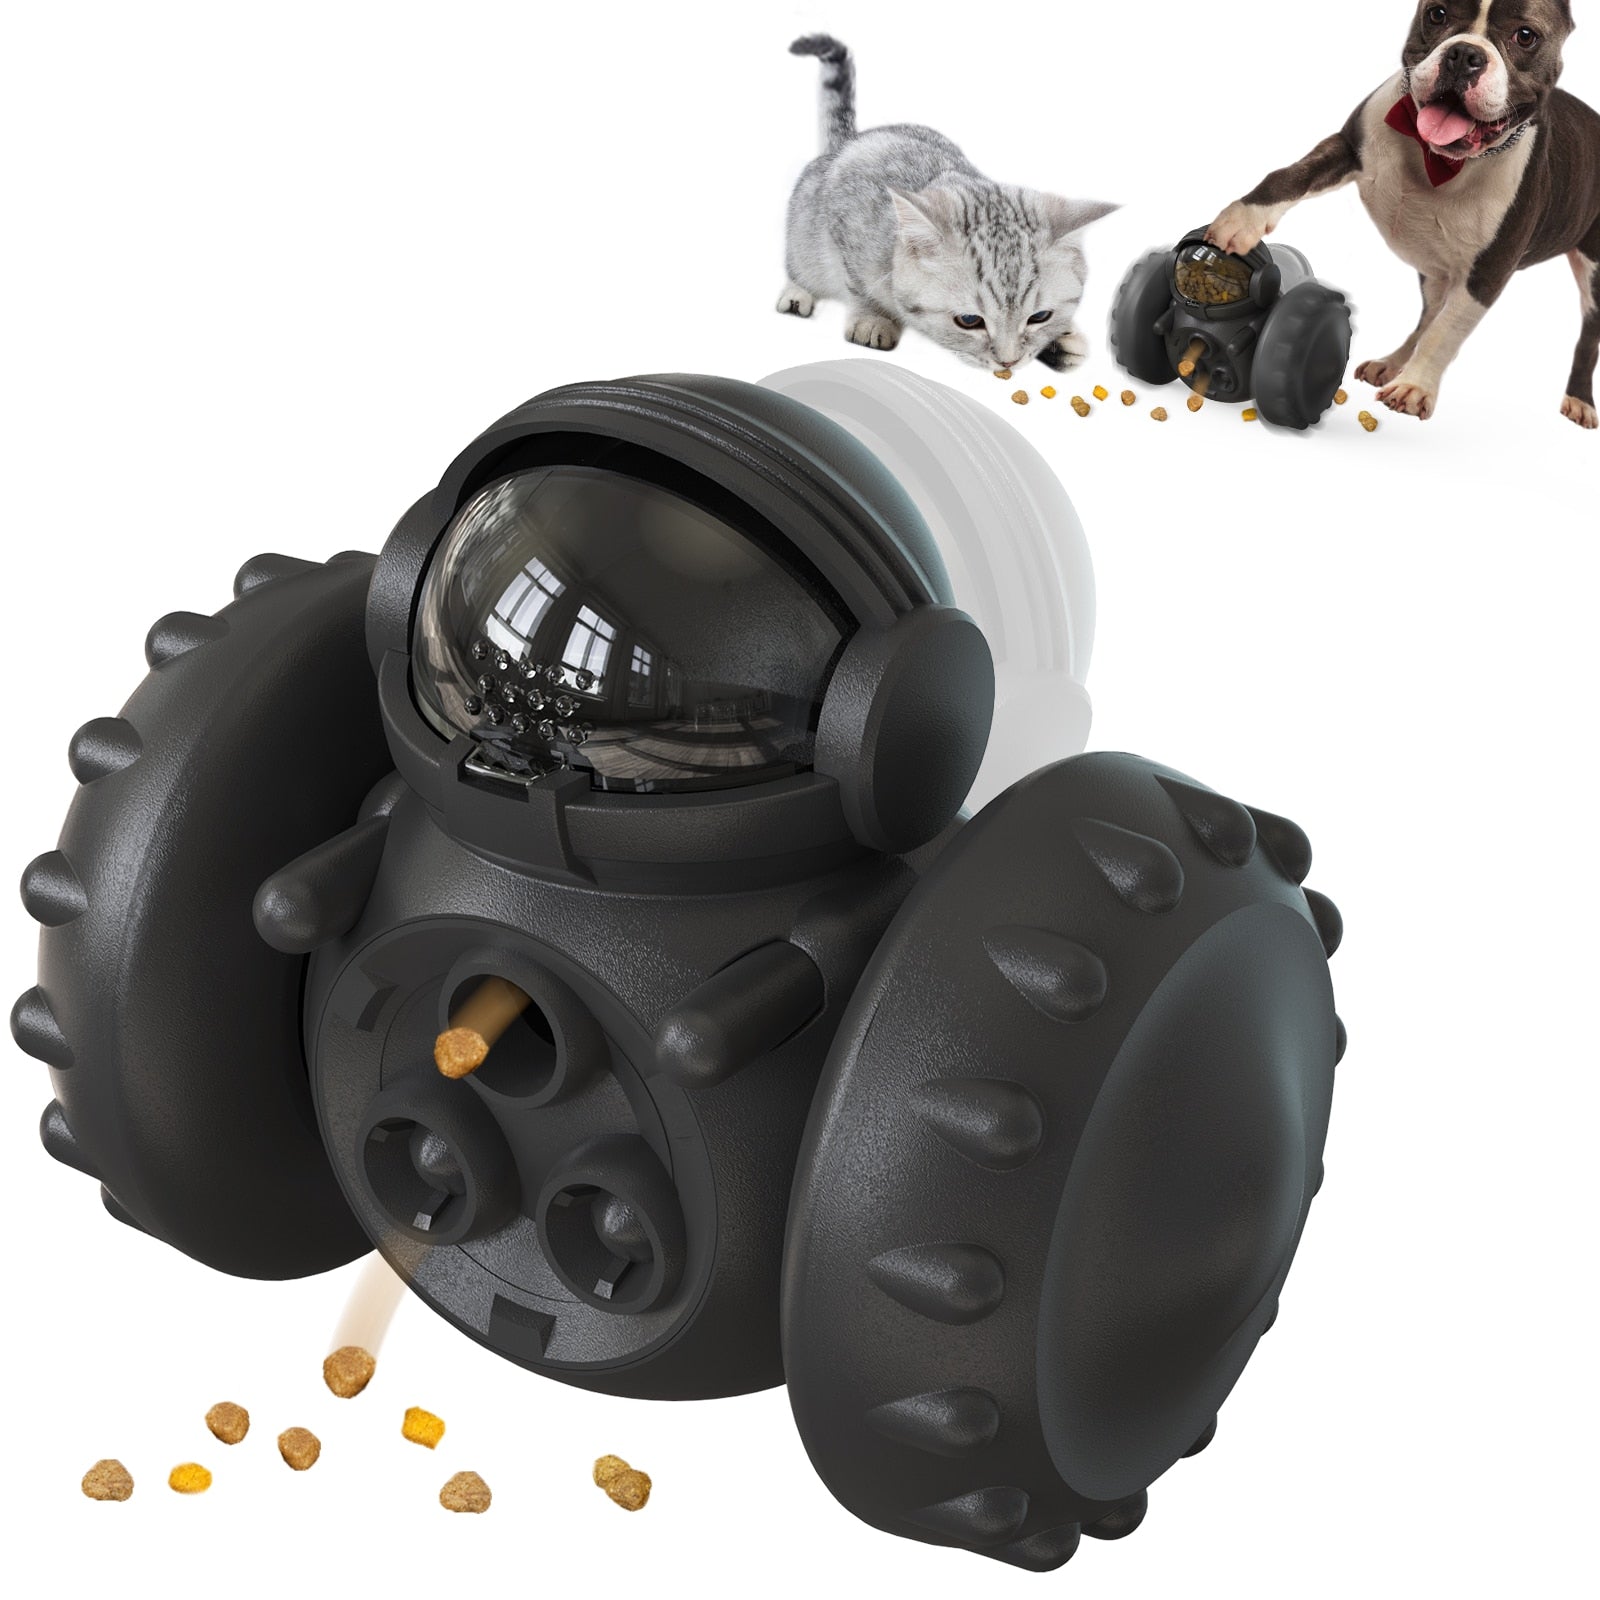 Dog Tumbler Interactive Toys